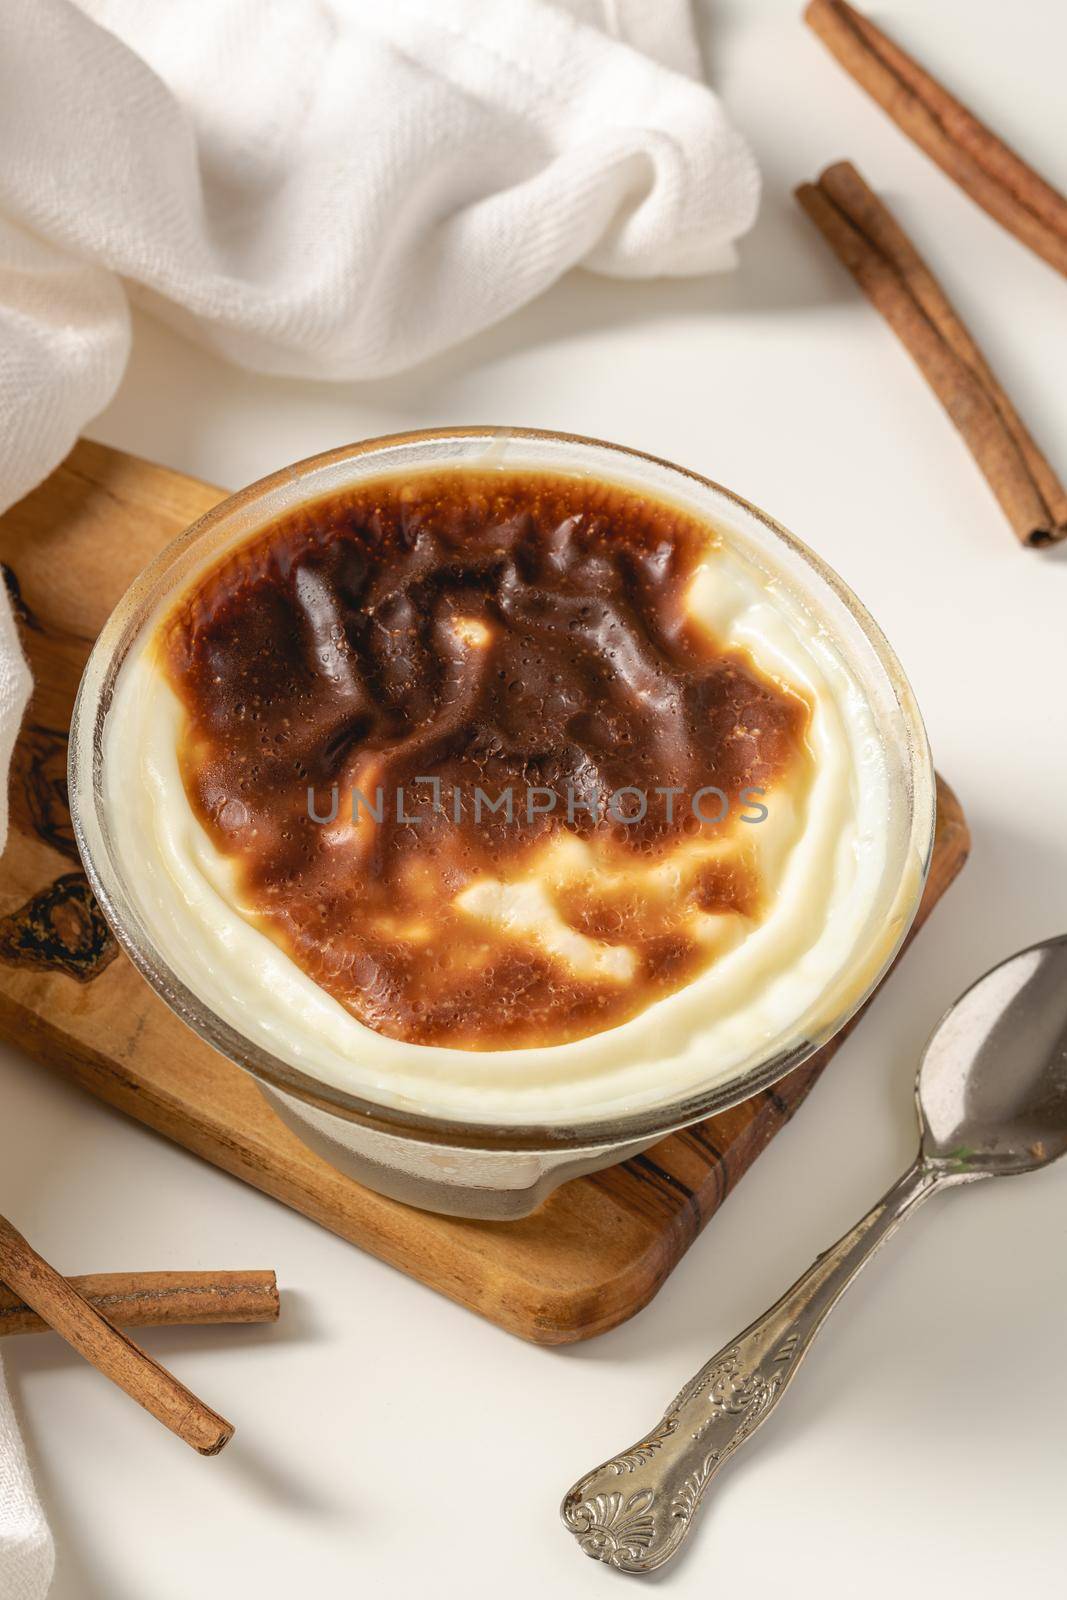 Traditional turkish dessert bakery rice pudding Turkish name Fırın Sutlac in glass bowl by Sonat